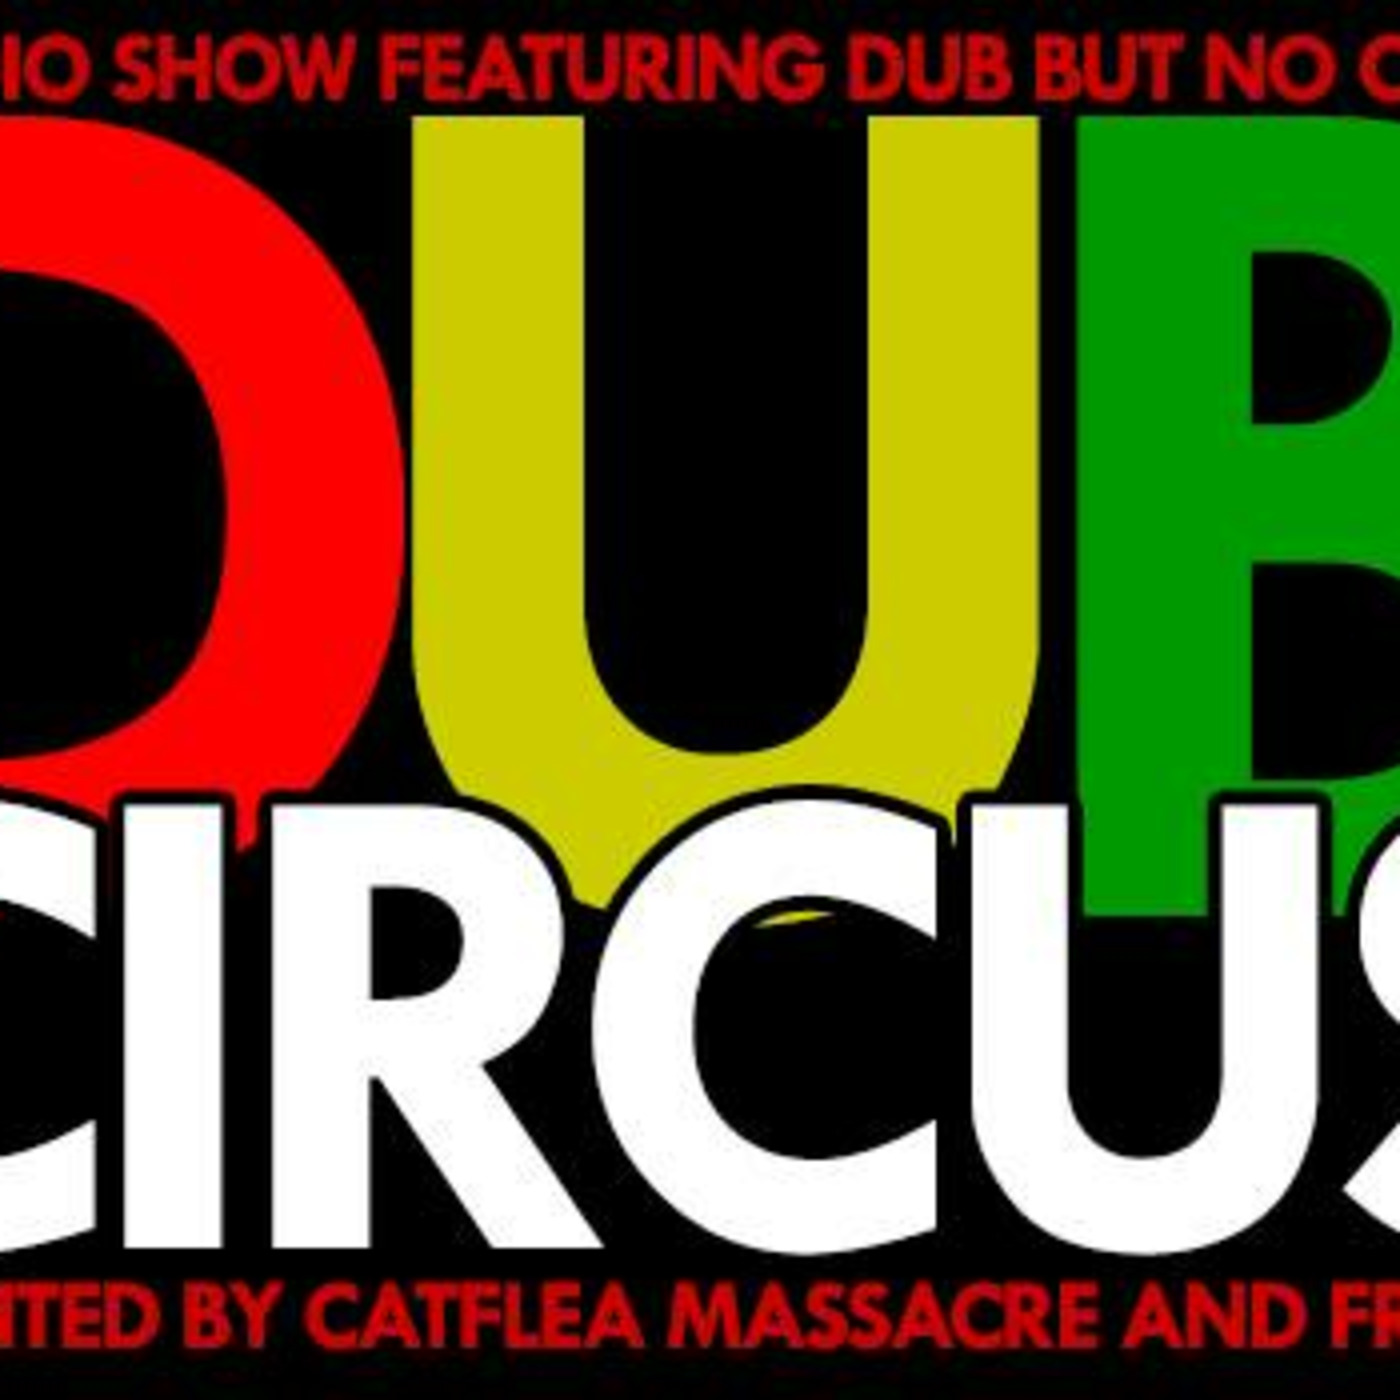 Episode 3597: Dub Circus Show 244 On bootboyradio.net